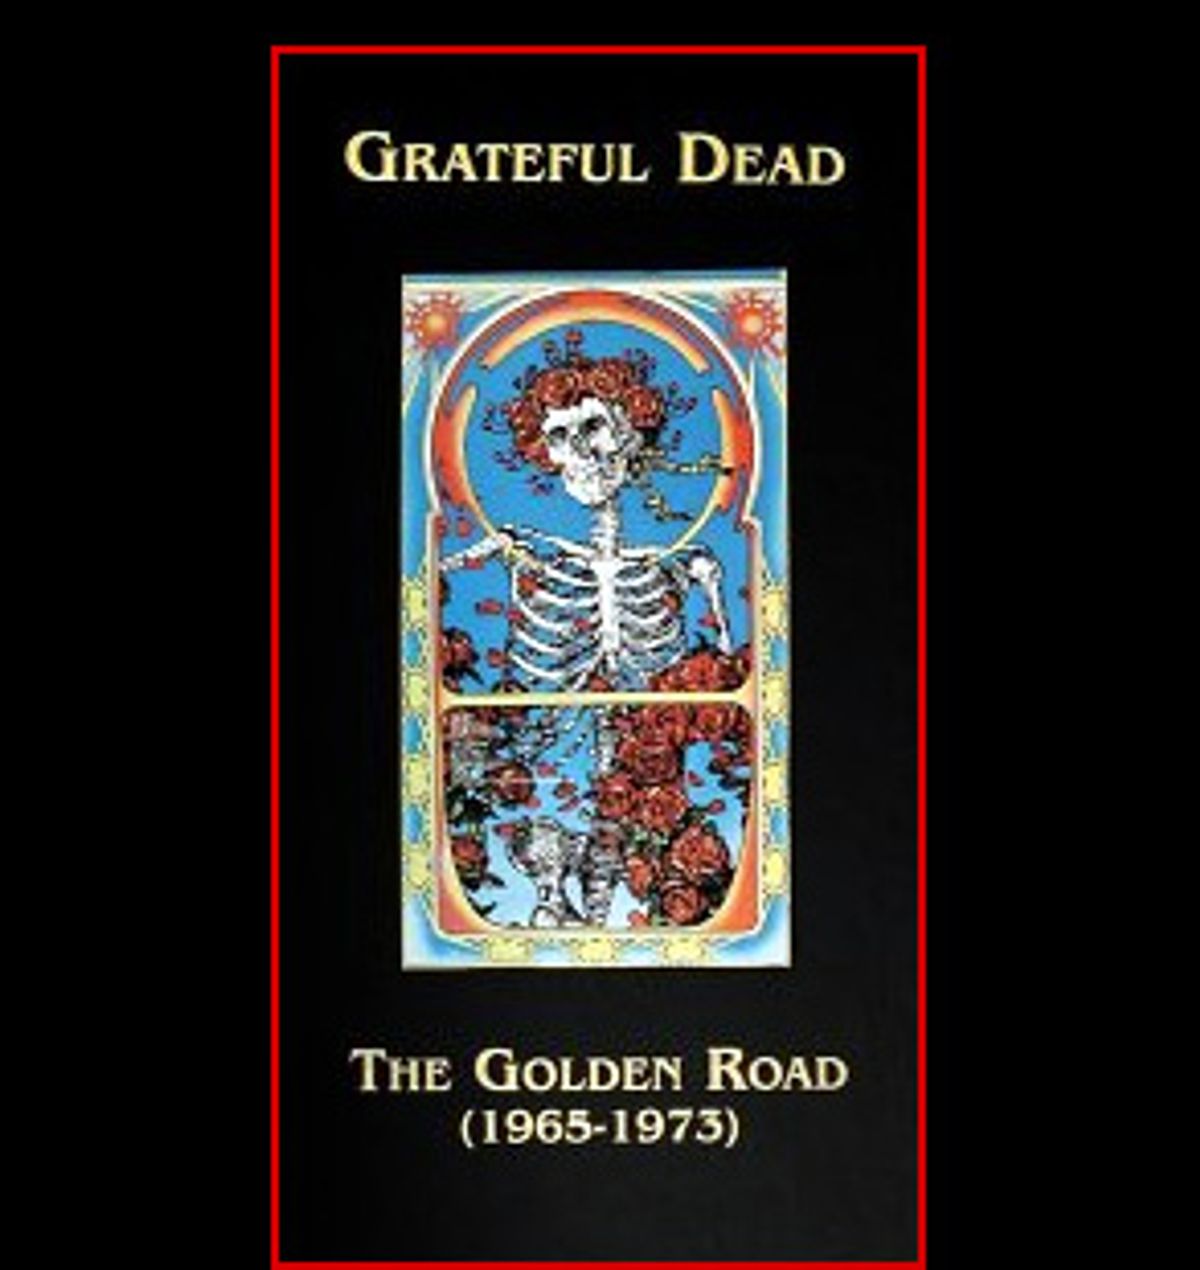 The Grateful Dead, alive again | Salon.com